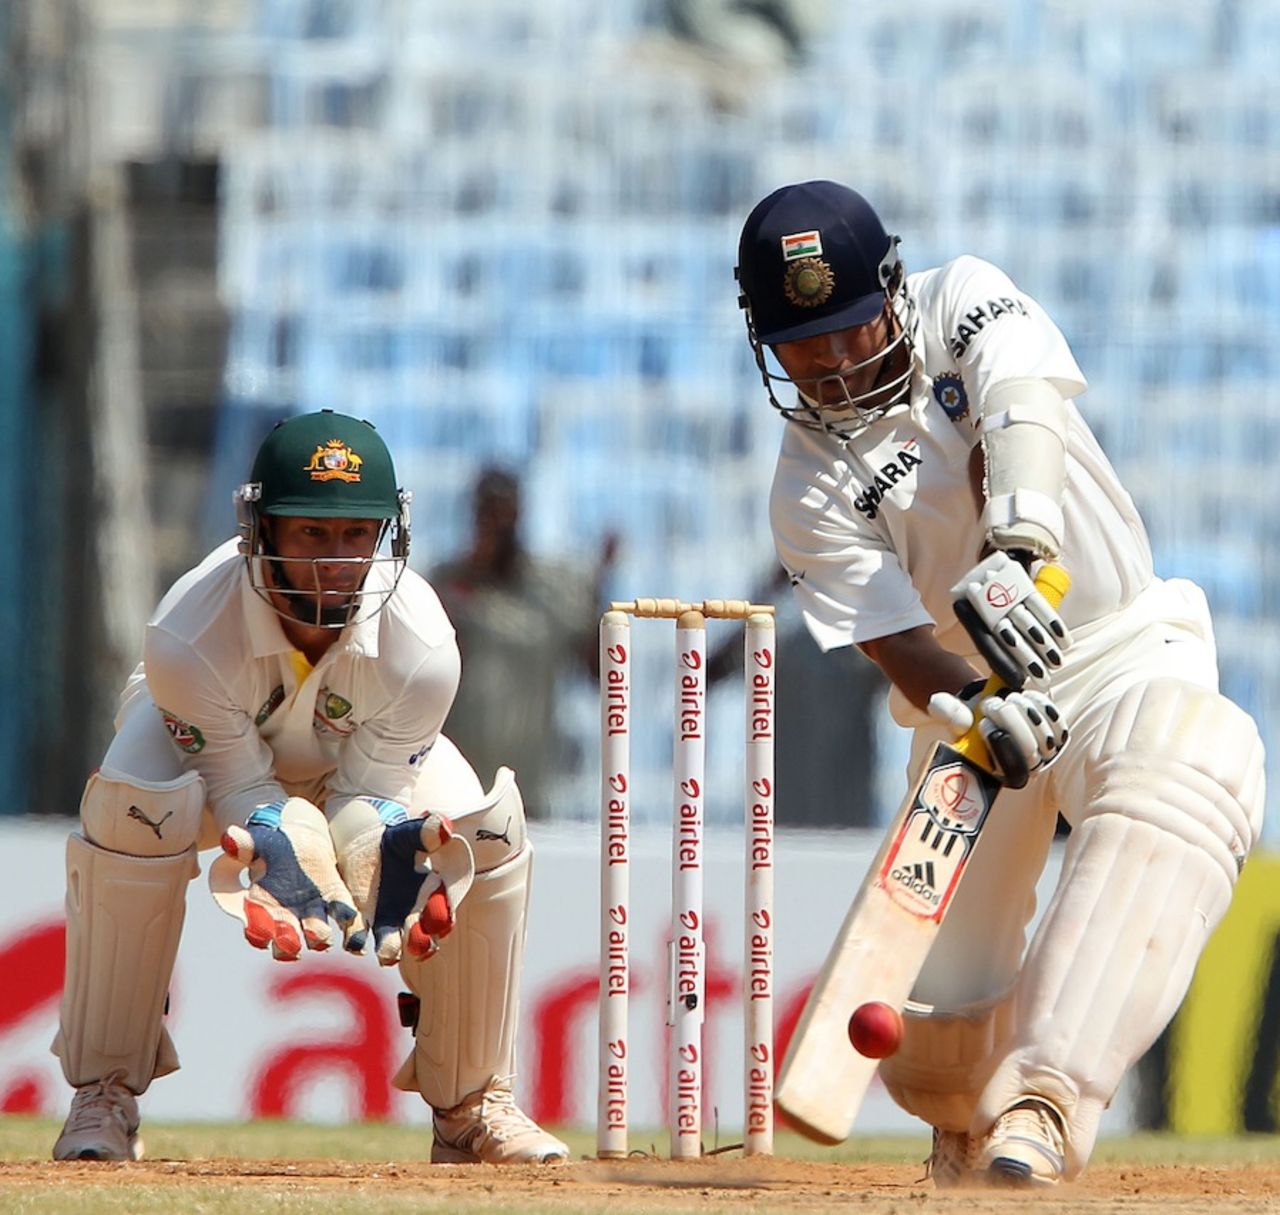 Sachin Tendulkar smashes his first ball for a six, India v Australia, 1st Test, Chennai, 5th day, February 26, 2013